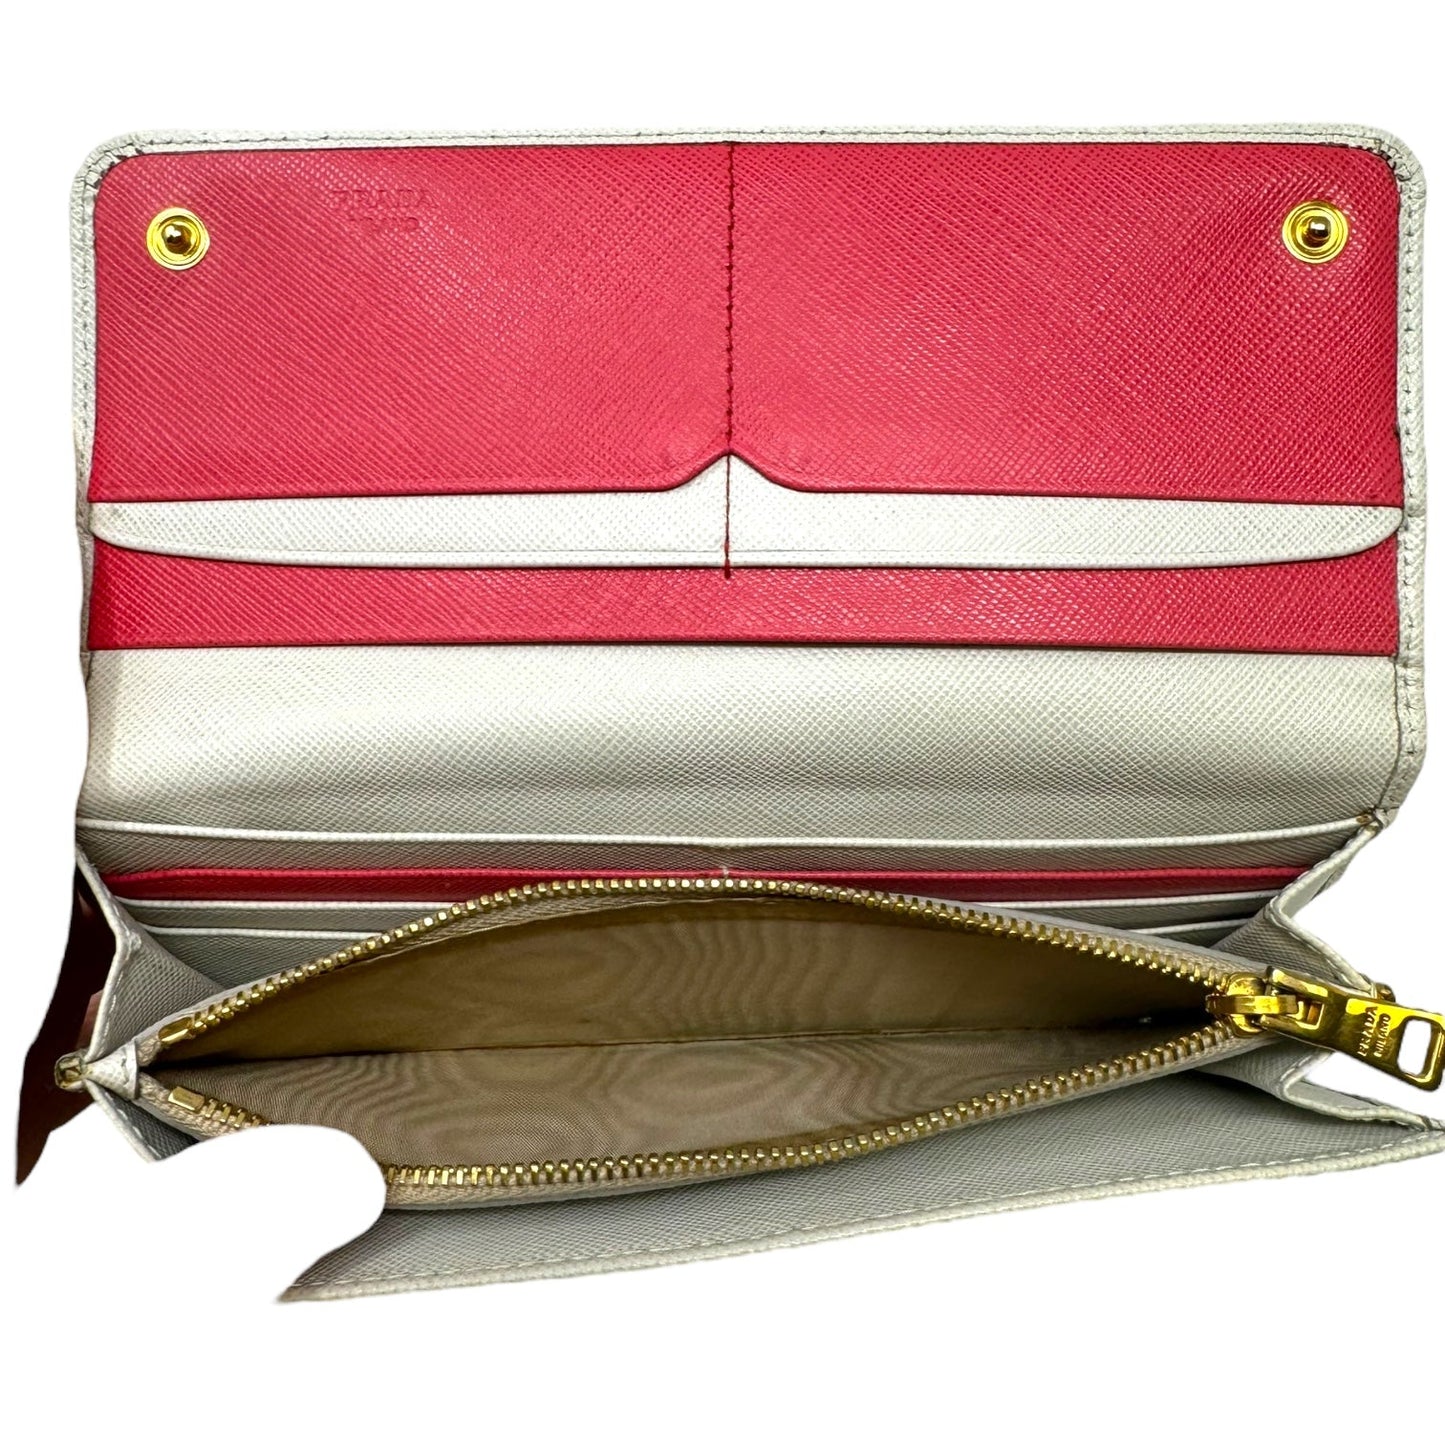 Saffiano Leather Wallet Luxury Designer By Prada  Size: Medium